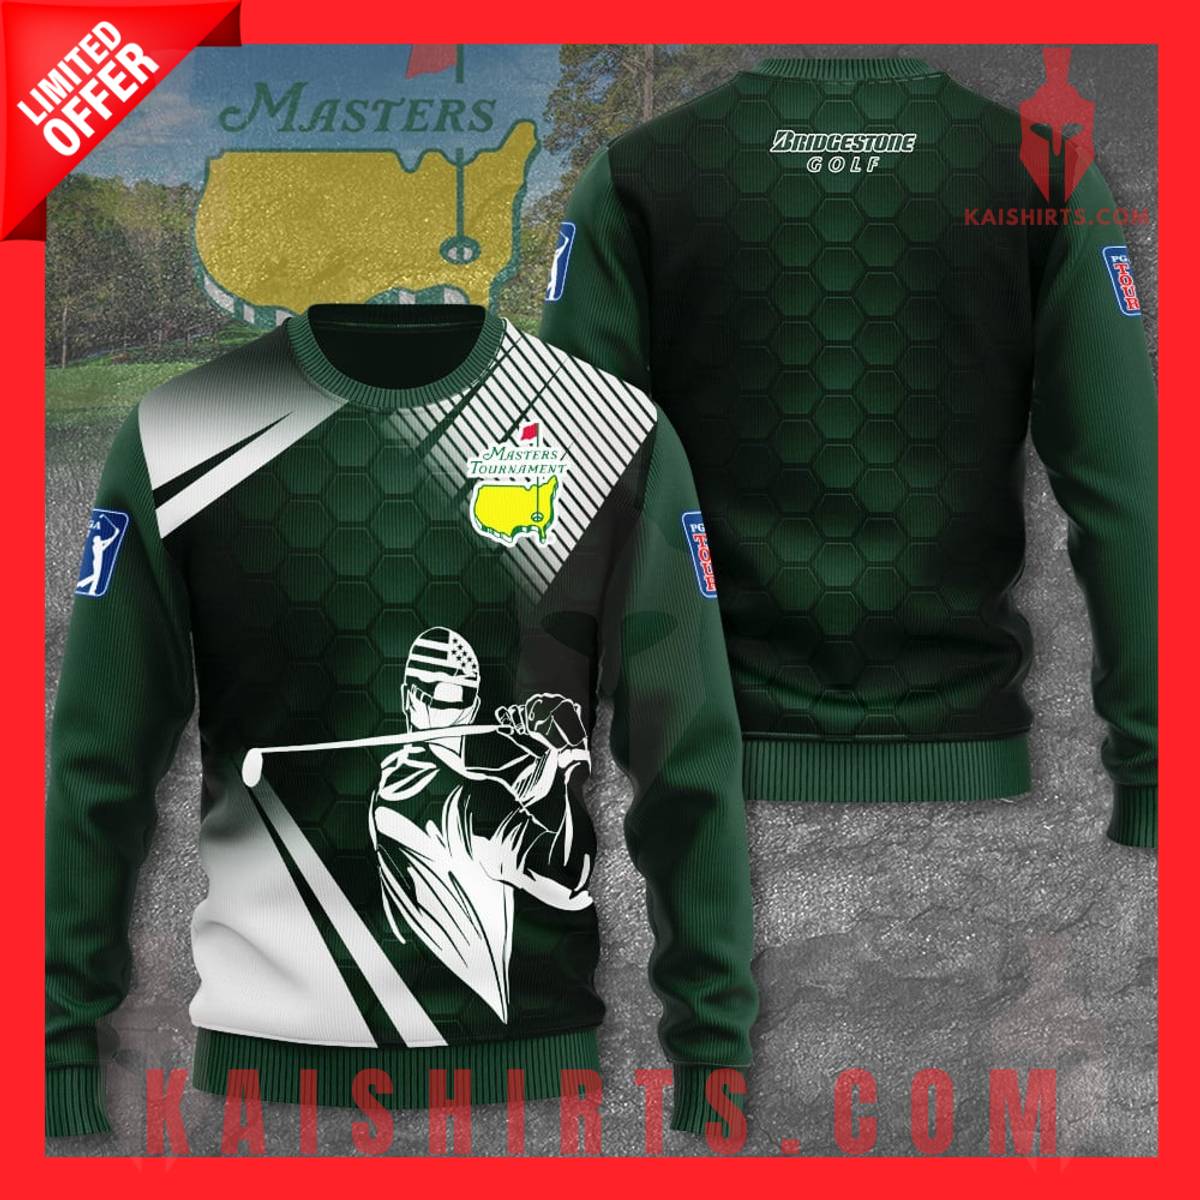 Bridgestone Golf Master Tournament Sweater's Product Pictures - Kaishirts.com